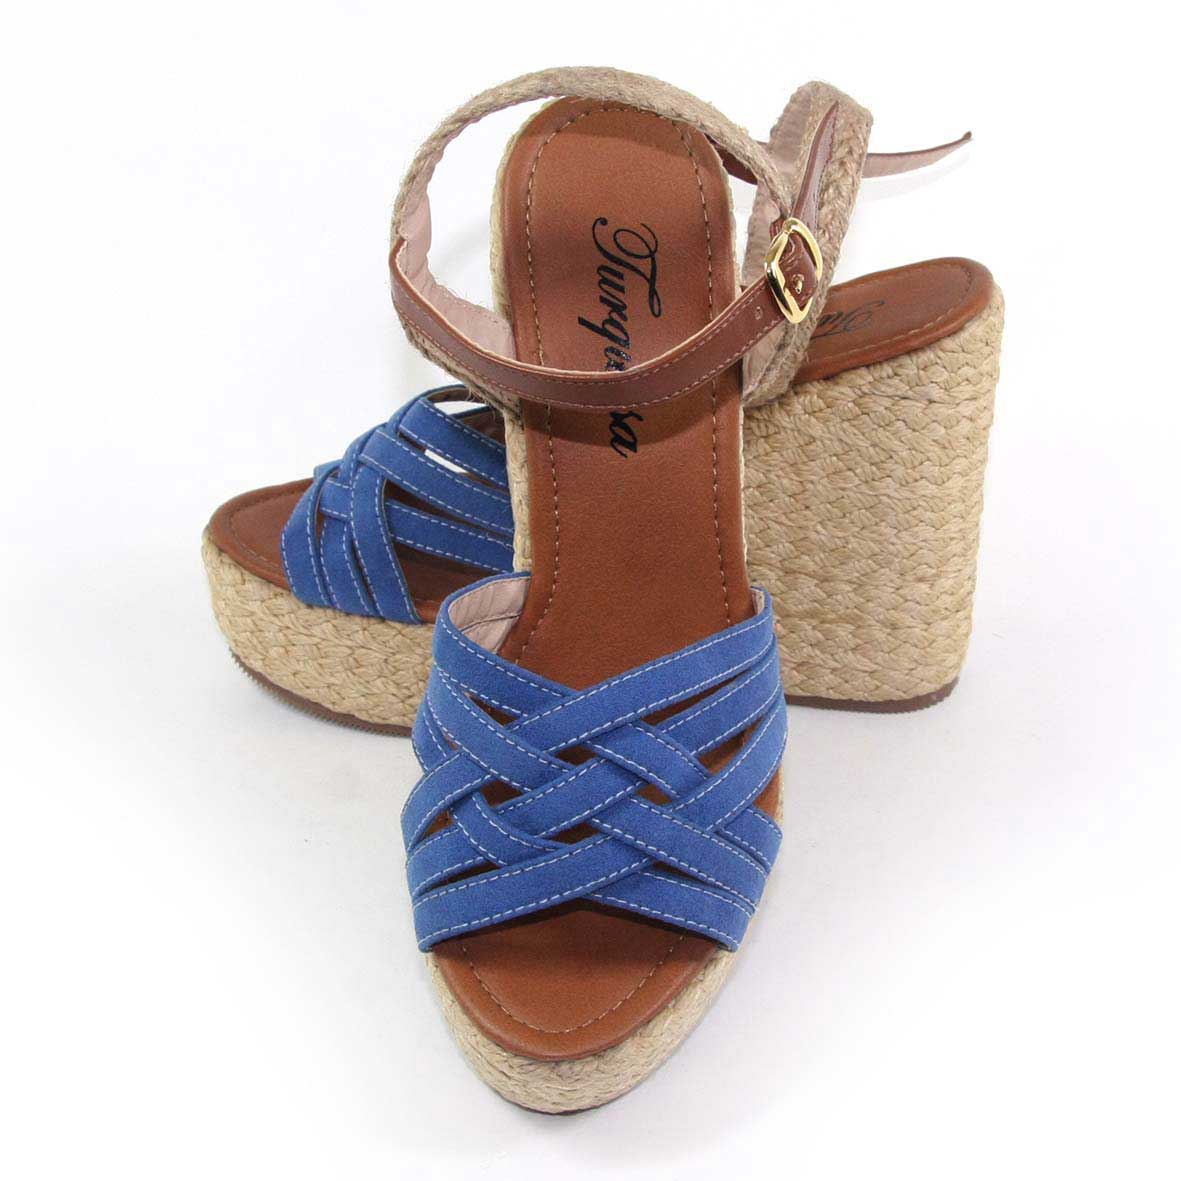 Sandalias con tacón de plataforma color azul